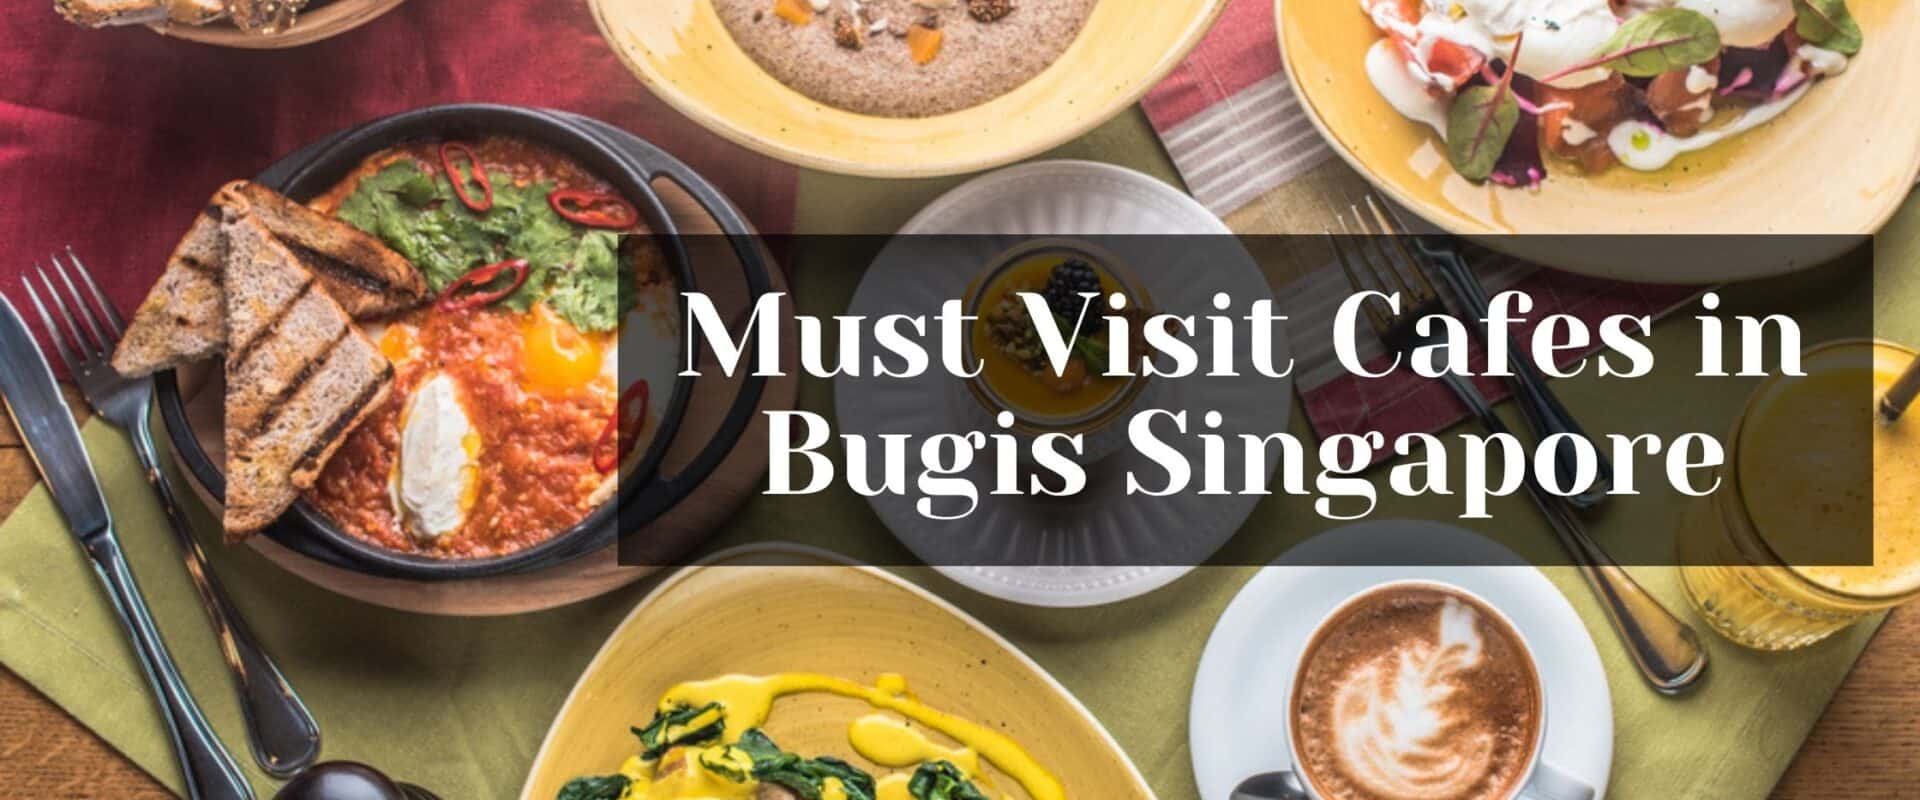 Top Cafes in Bugis Singapore, cafes in bugis to study, affordable cafes in bugis, new cafes in bugis, halal cafes in bugis, aesthetic cafes in bugis, cafes near bugis mrt, bugis cafe, best coffee bugis, best cafes restaurants at Bugis,